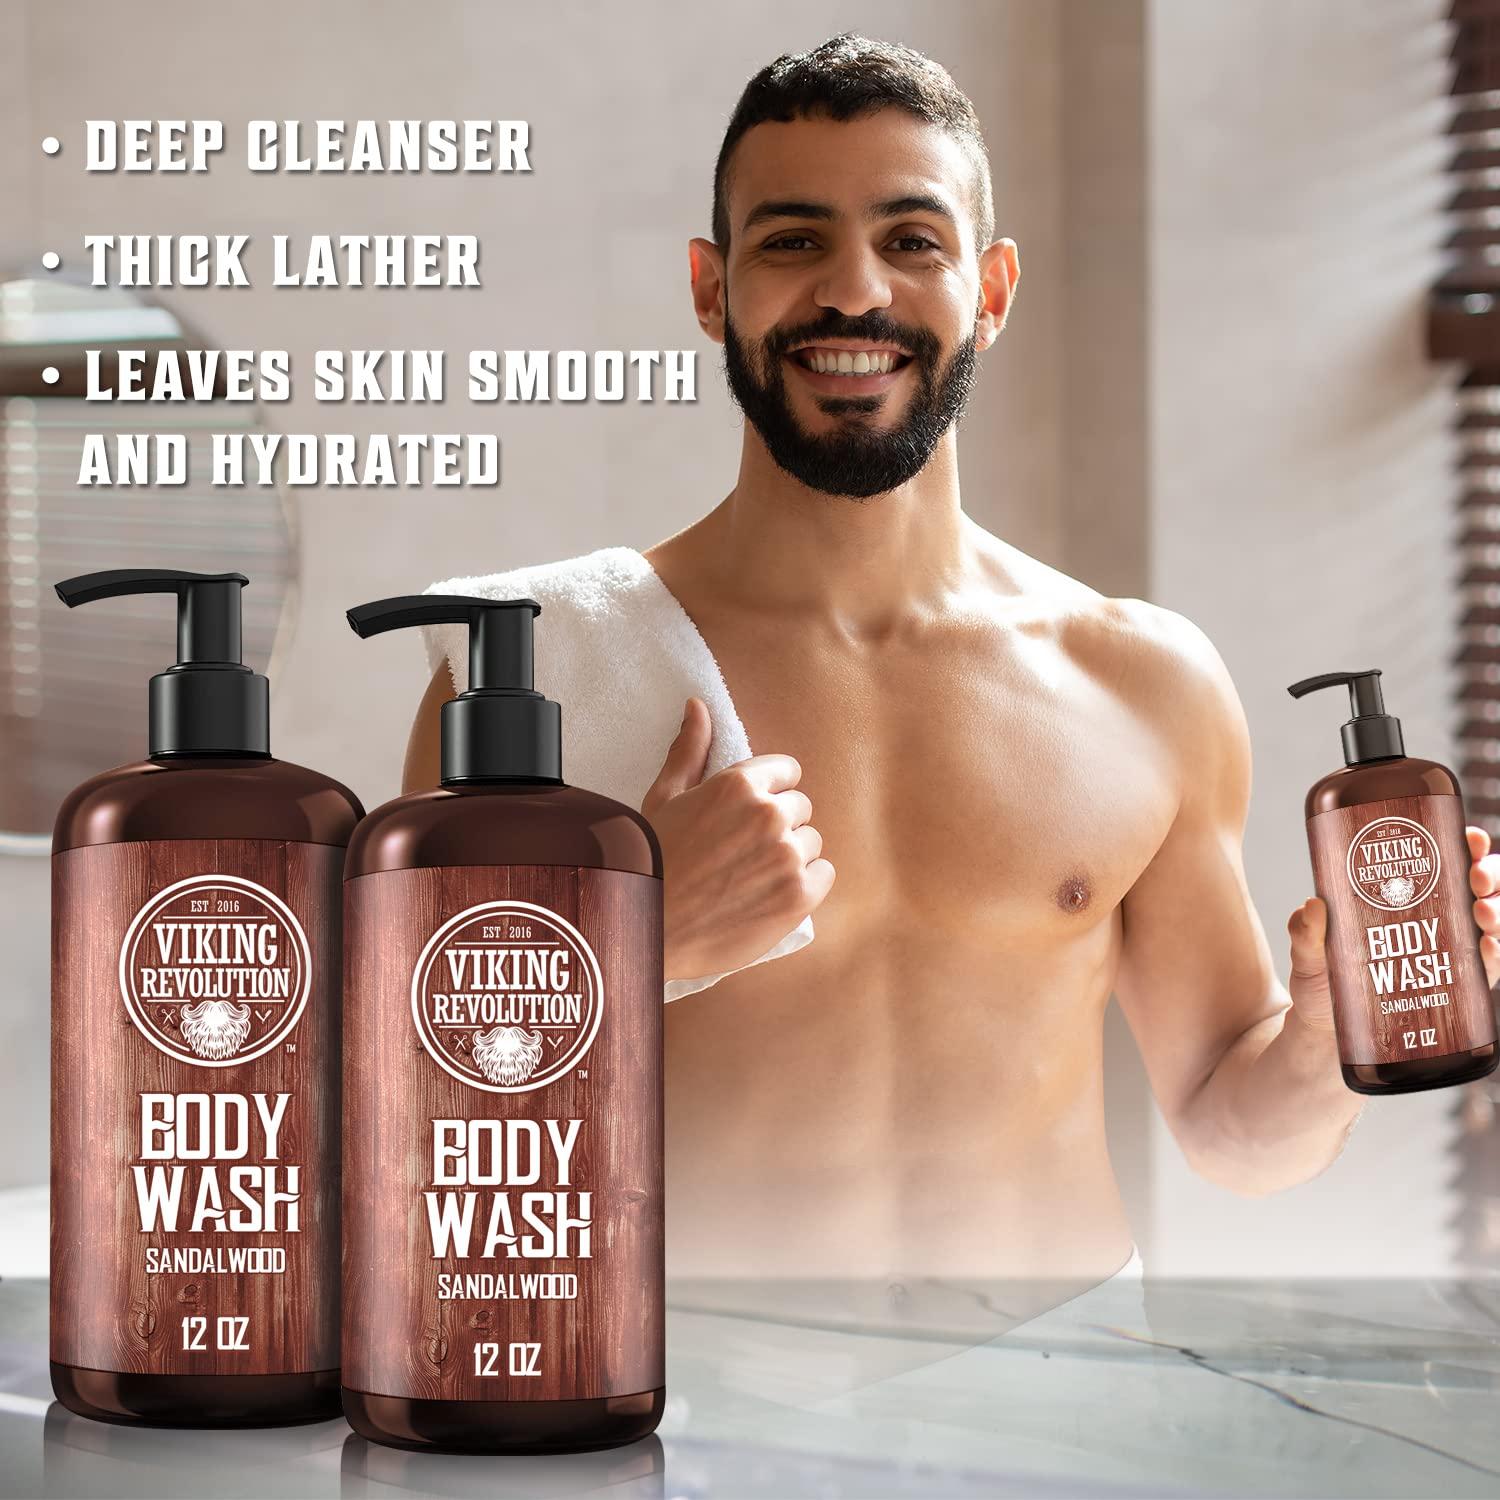 Viking Revolution Men's Body Wash - Sandalwood Body Wash for Men